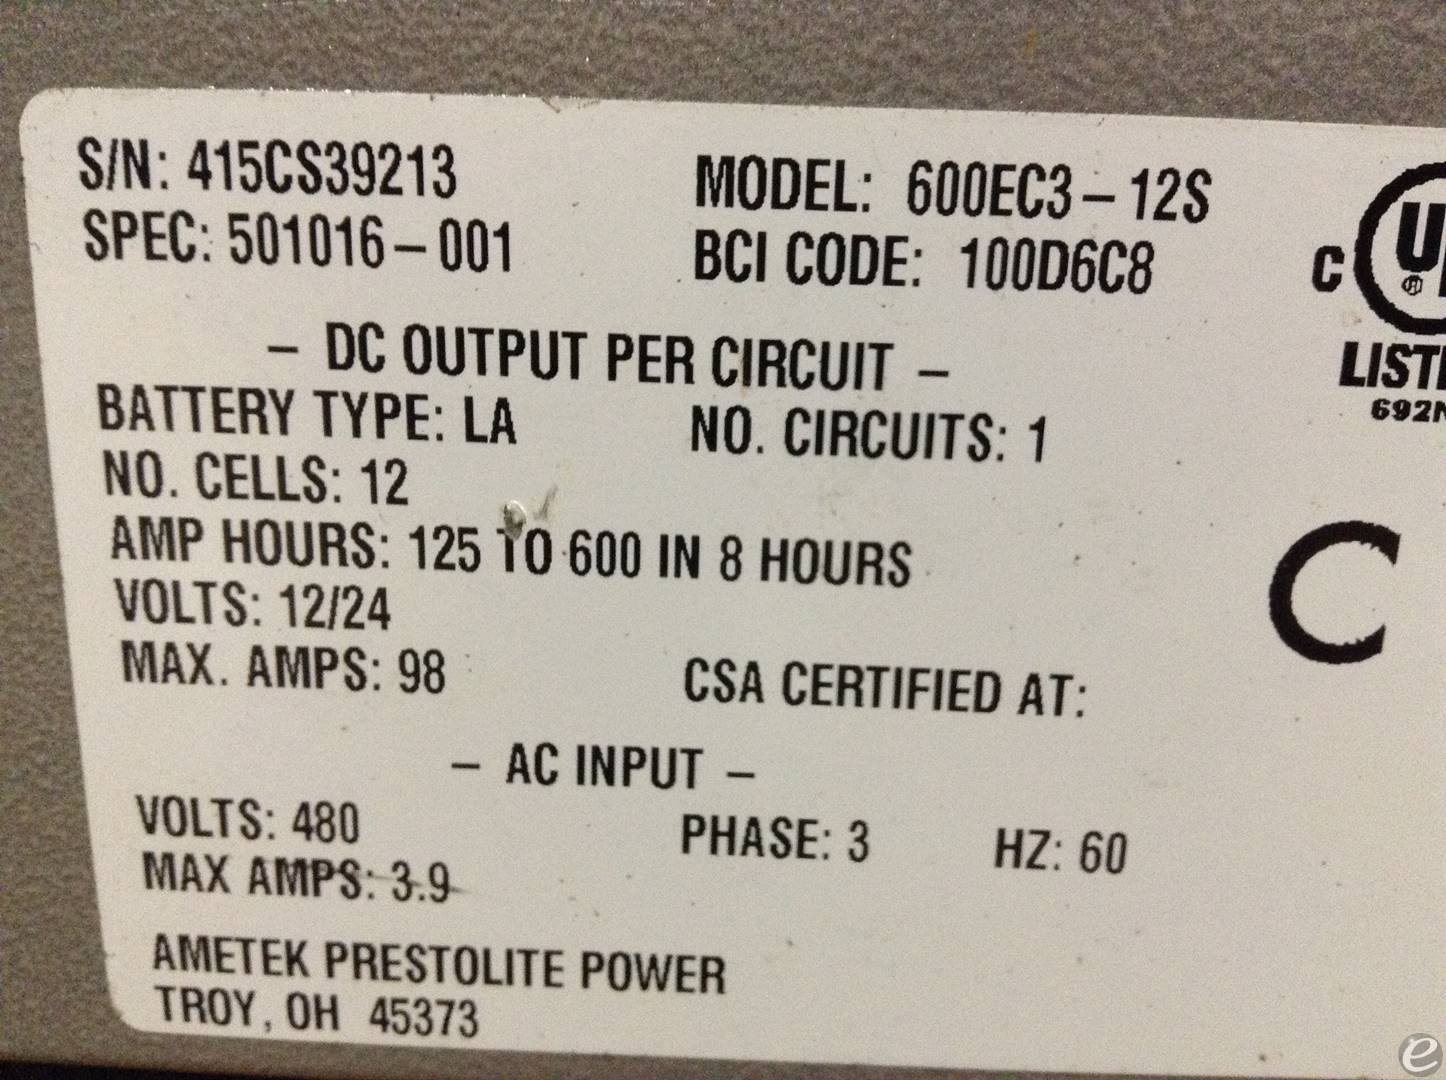 Ametek Prestolite Power 600EC3-12S